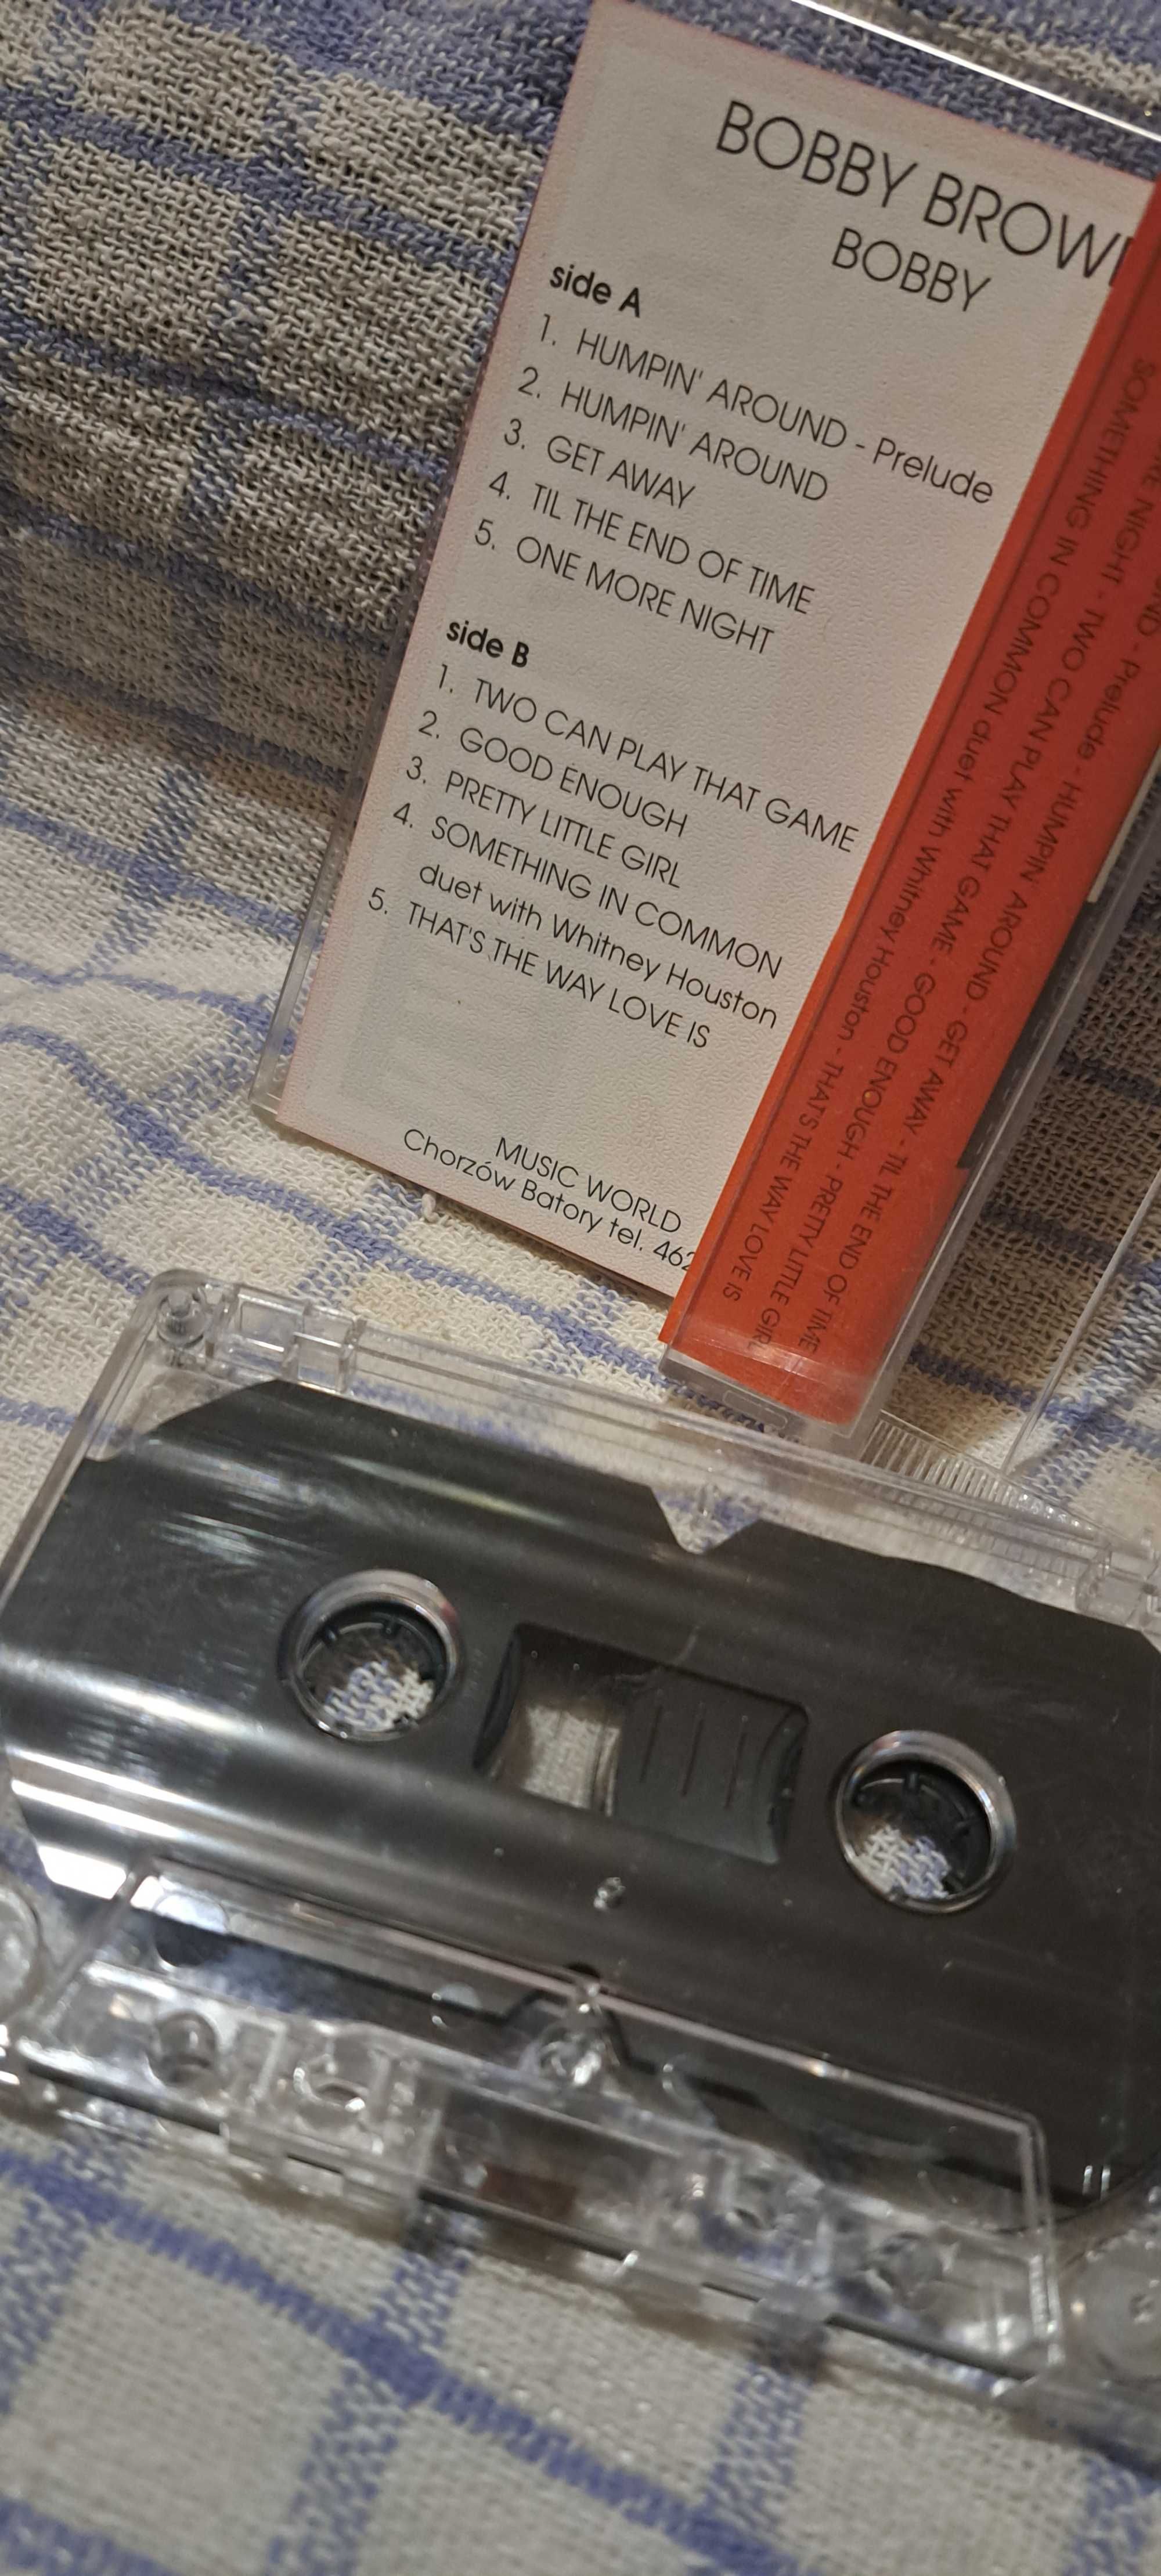 Bobby Brown kaseta audio